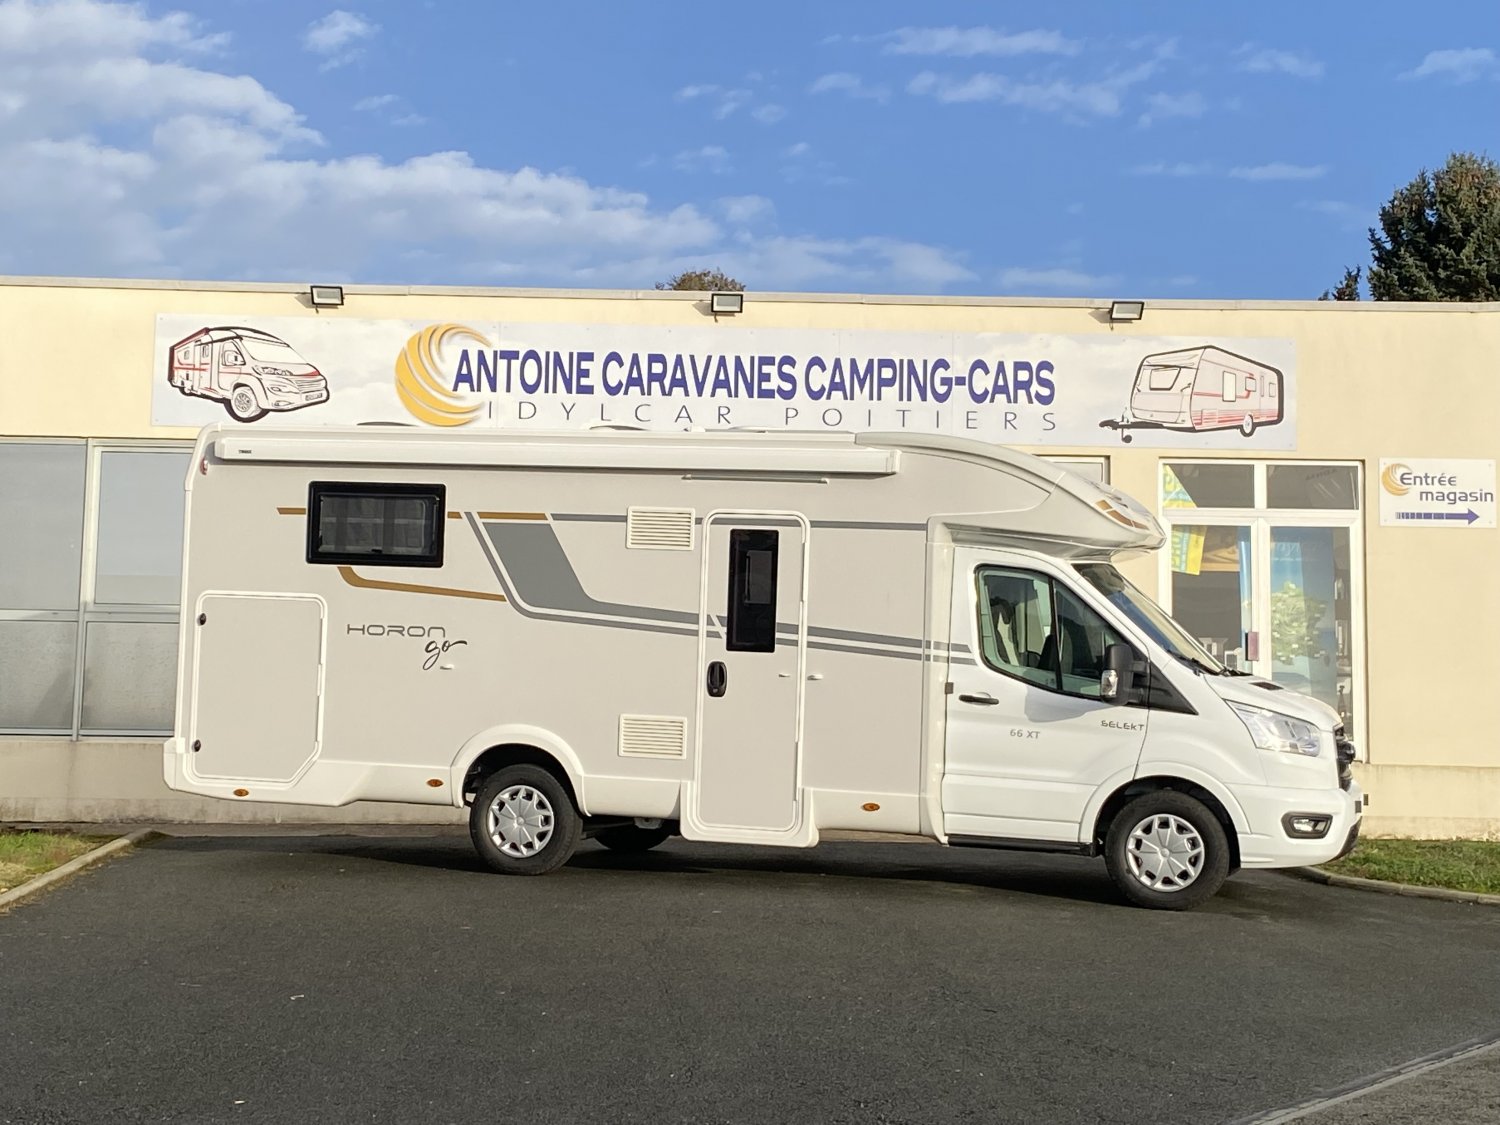 Champion Caravanes et Camping Car - C.I. Horon GO 66 XT à 73 140€